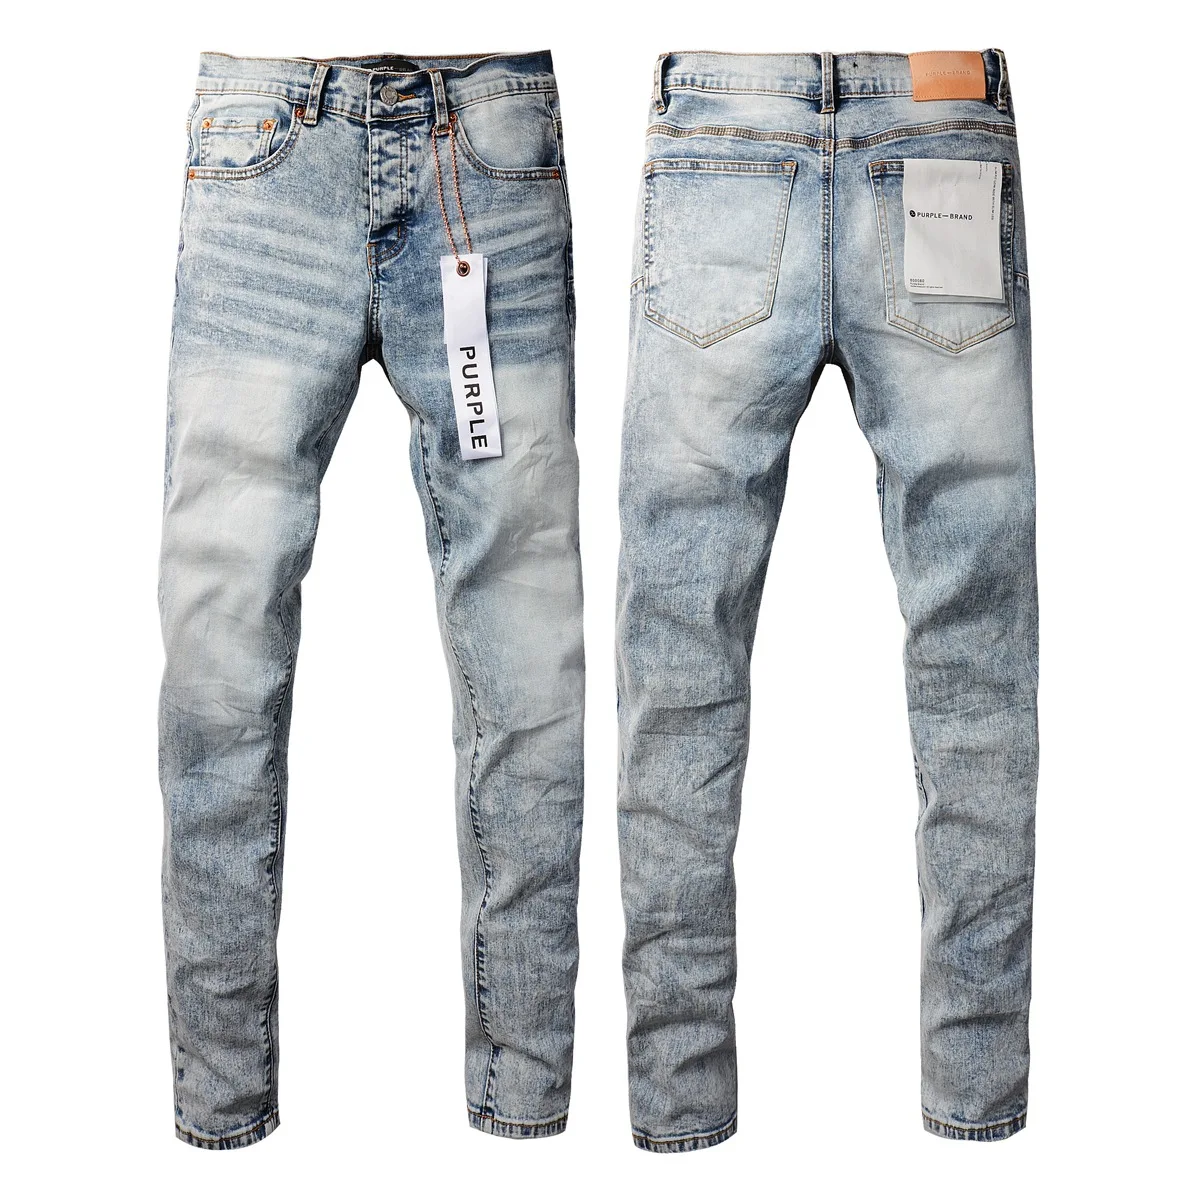 

NEW Fashion streetwear Purples jeans Man Fashion top quality Repair Low Raise Skinny Denim US big SIZE brands pants